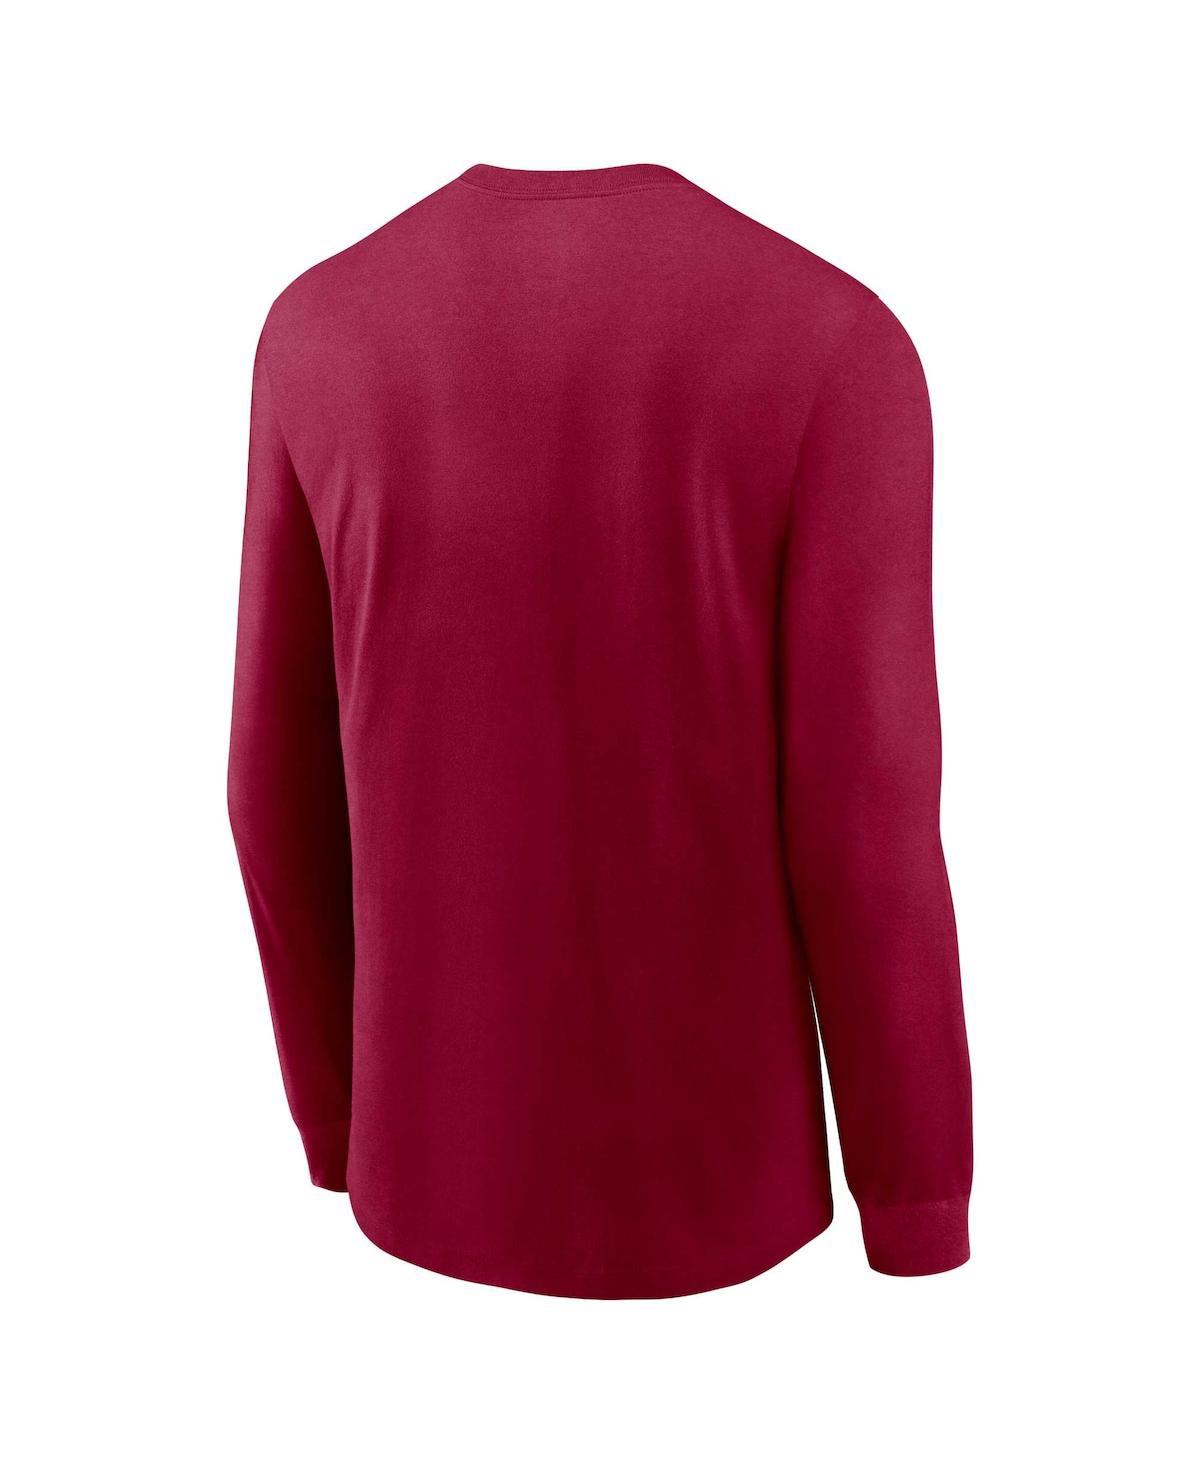 Shop Nike Men's  Burgundy Washington Commanders Fashion Tri-blend Long Sleeve T-shirt